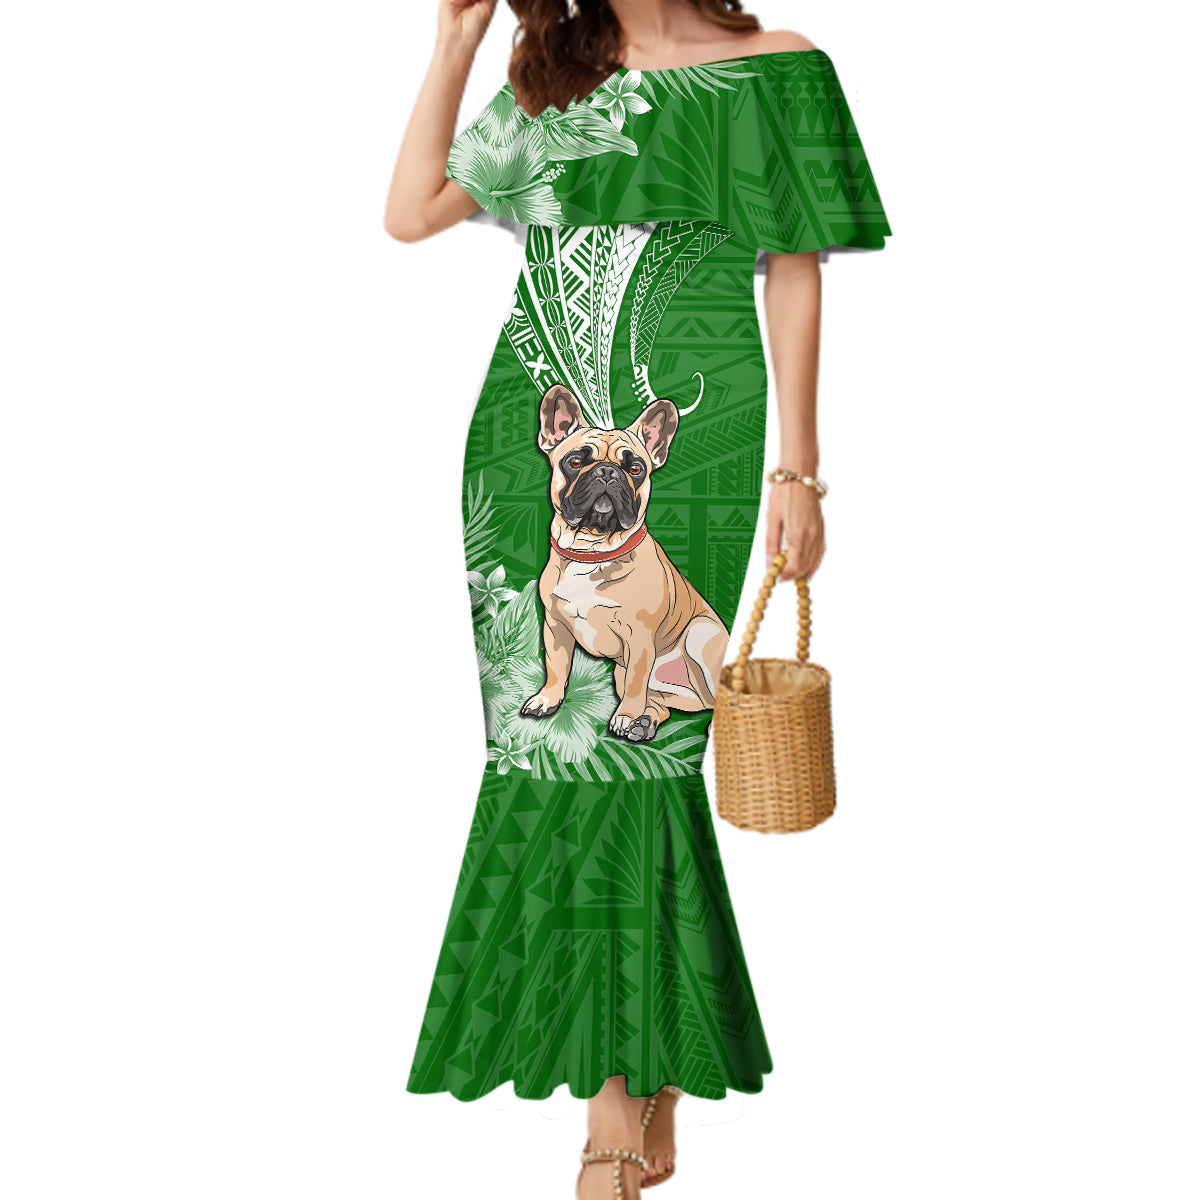 Personalised Polynesian Pacific Bulldog Mermaid Dress With Emerald Hawaii Tribal Tattoo Patterns LT7 Women Green - Polynesian Pride